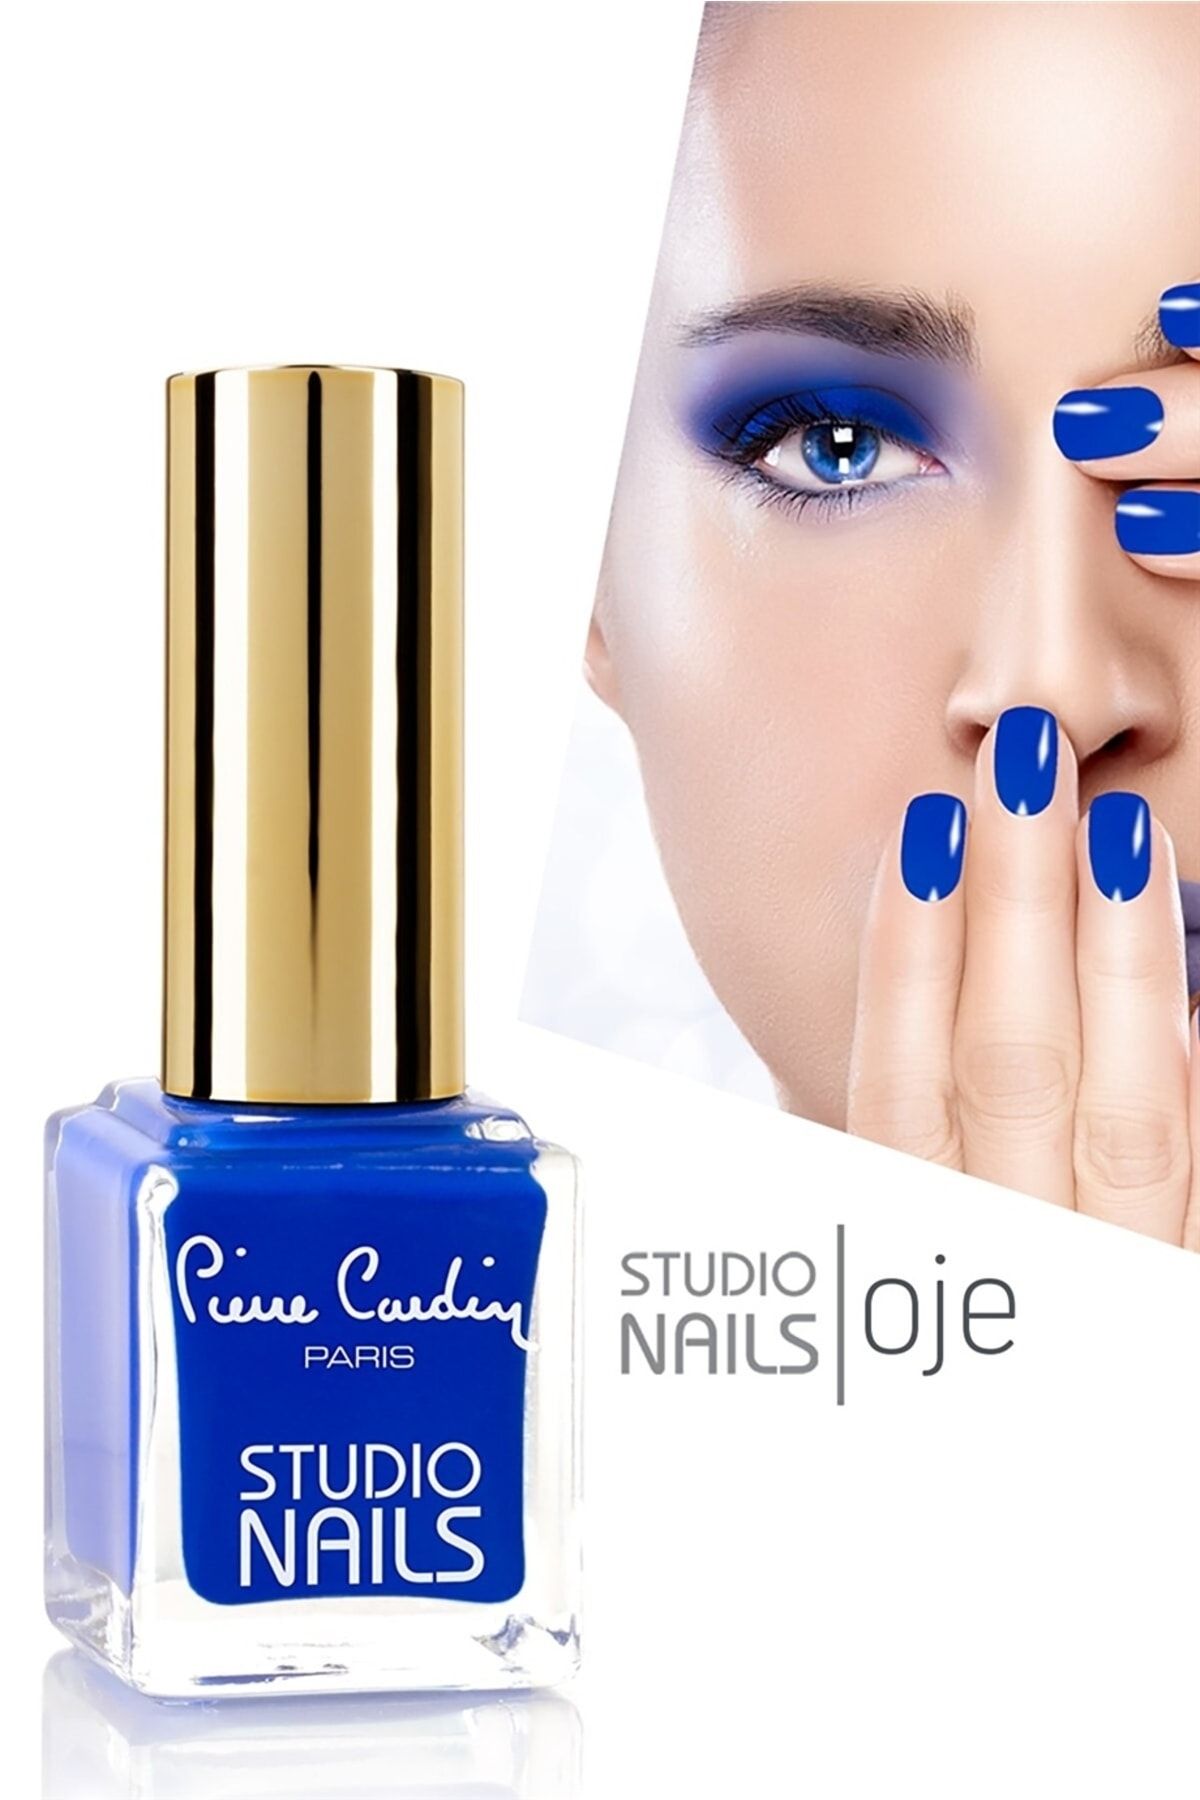 Pierre Cardin Studio Nails Oje - 078 14332